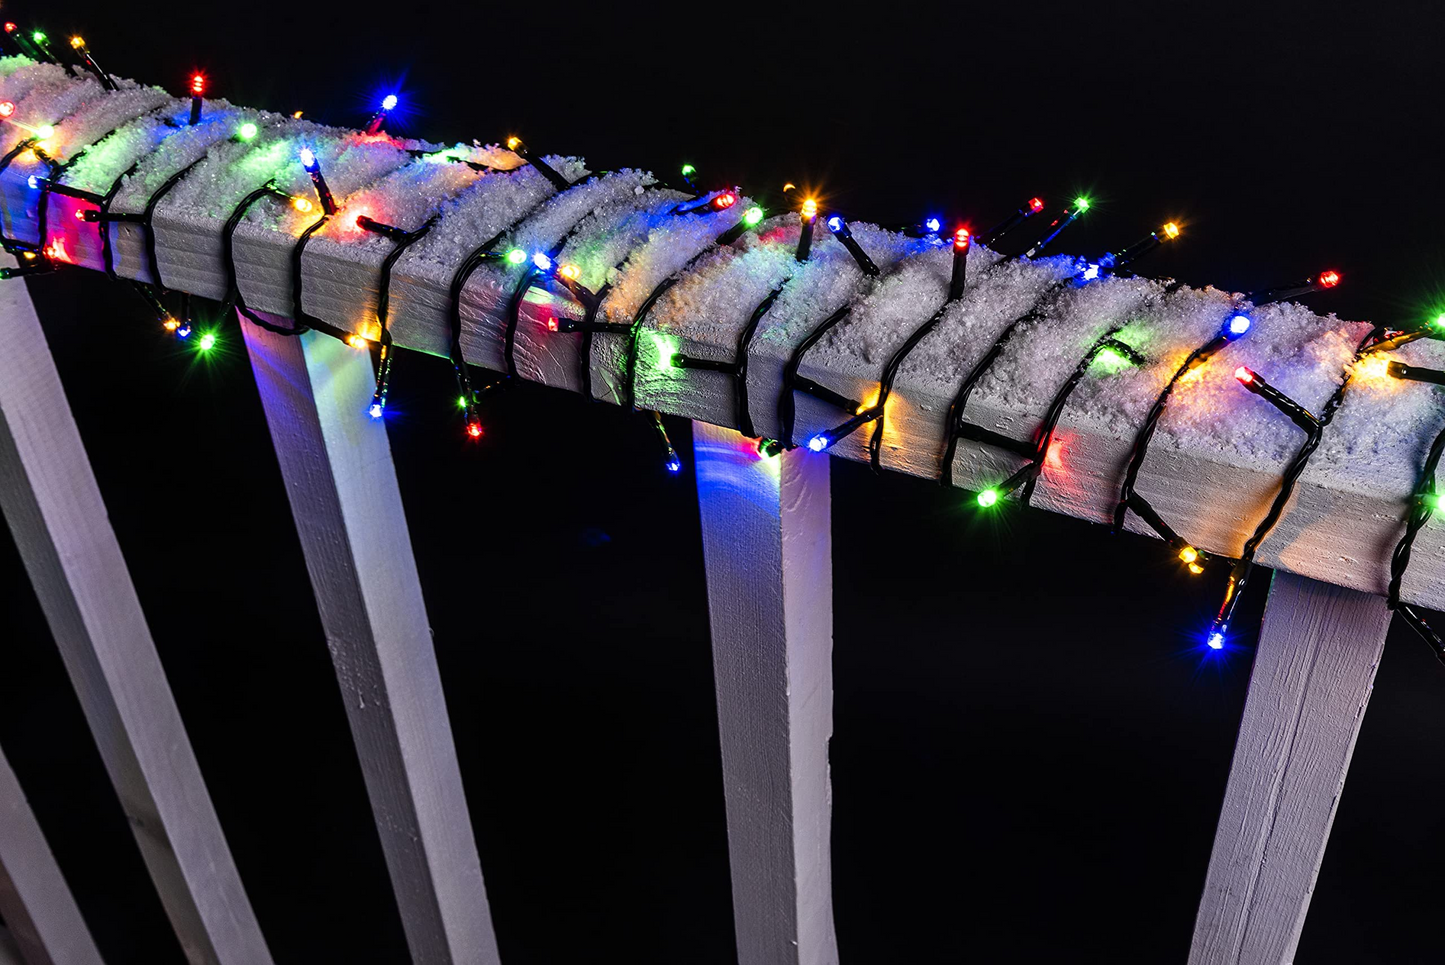 1000 LED Christmas String Lights Multicolor